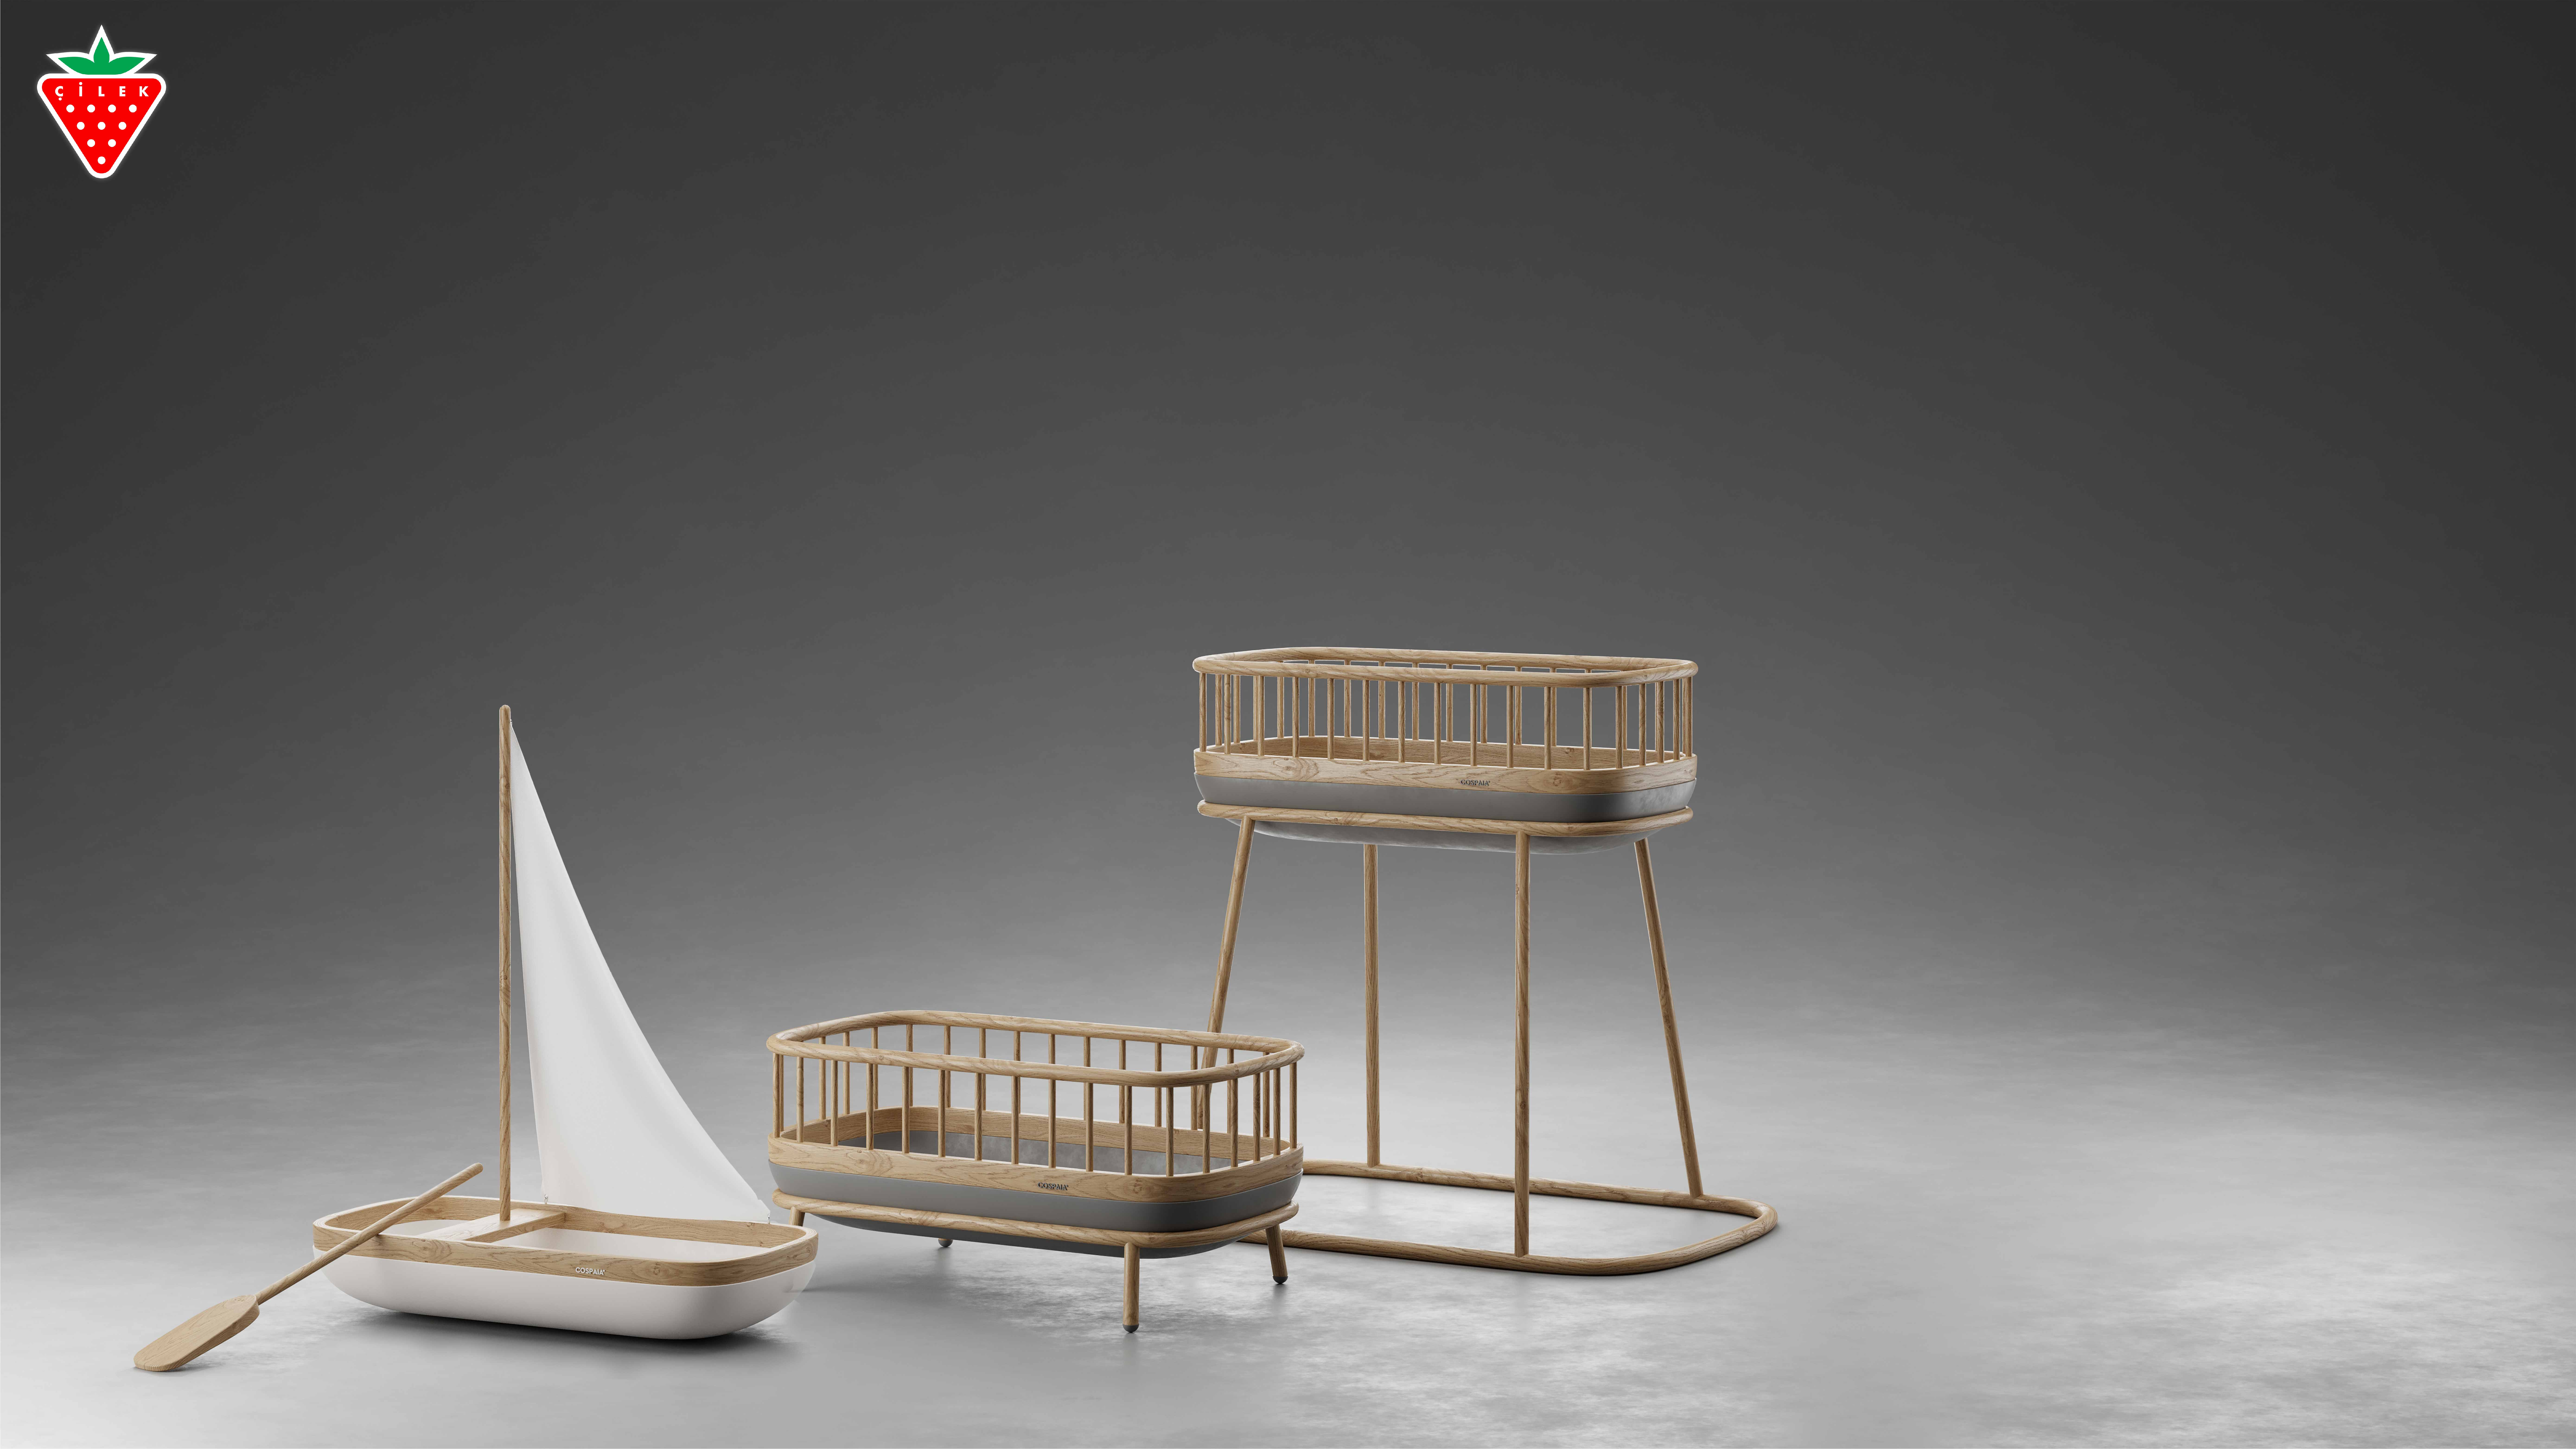 Koza Crib-Crib Design that Provides Baby's Comfort